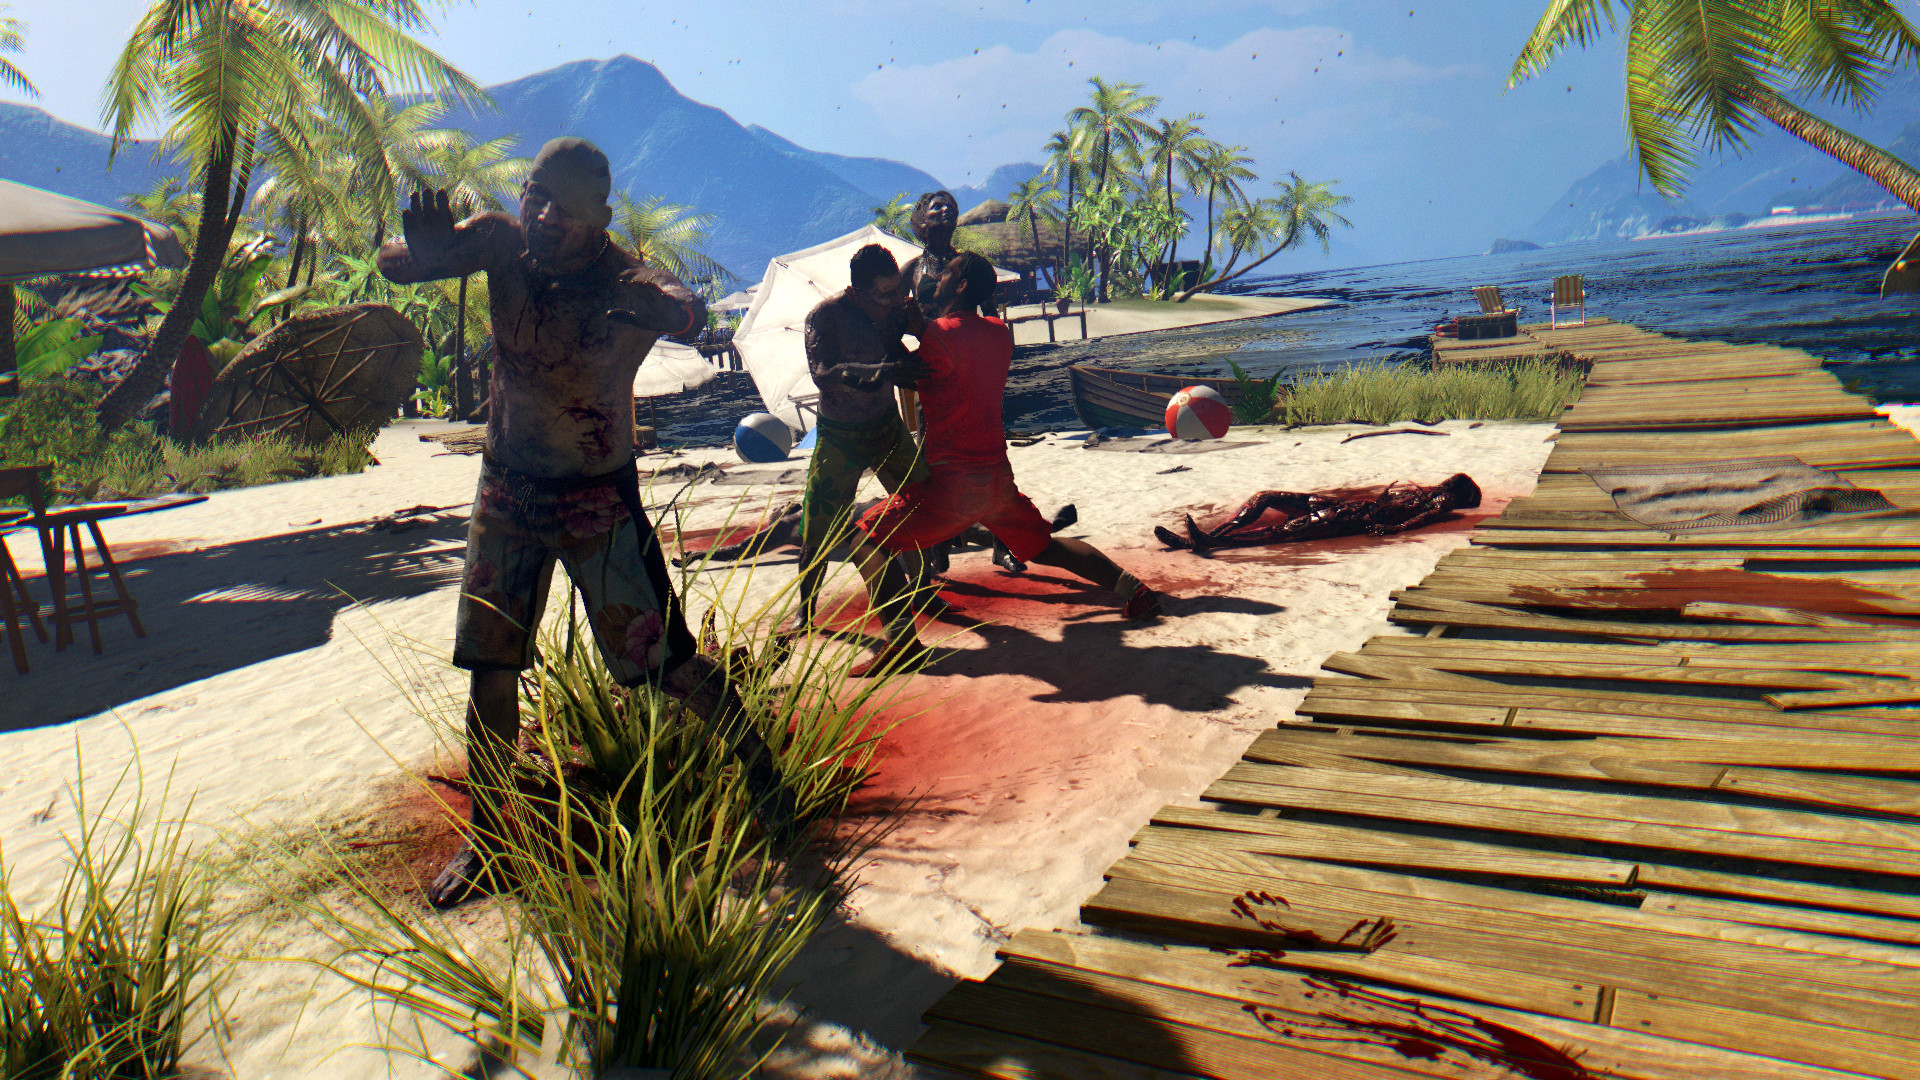 Dead Island Mobile Game Full Version Download